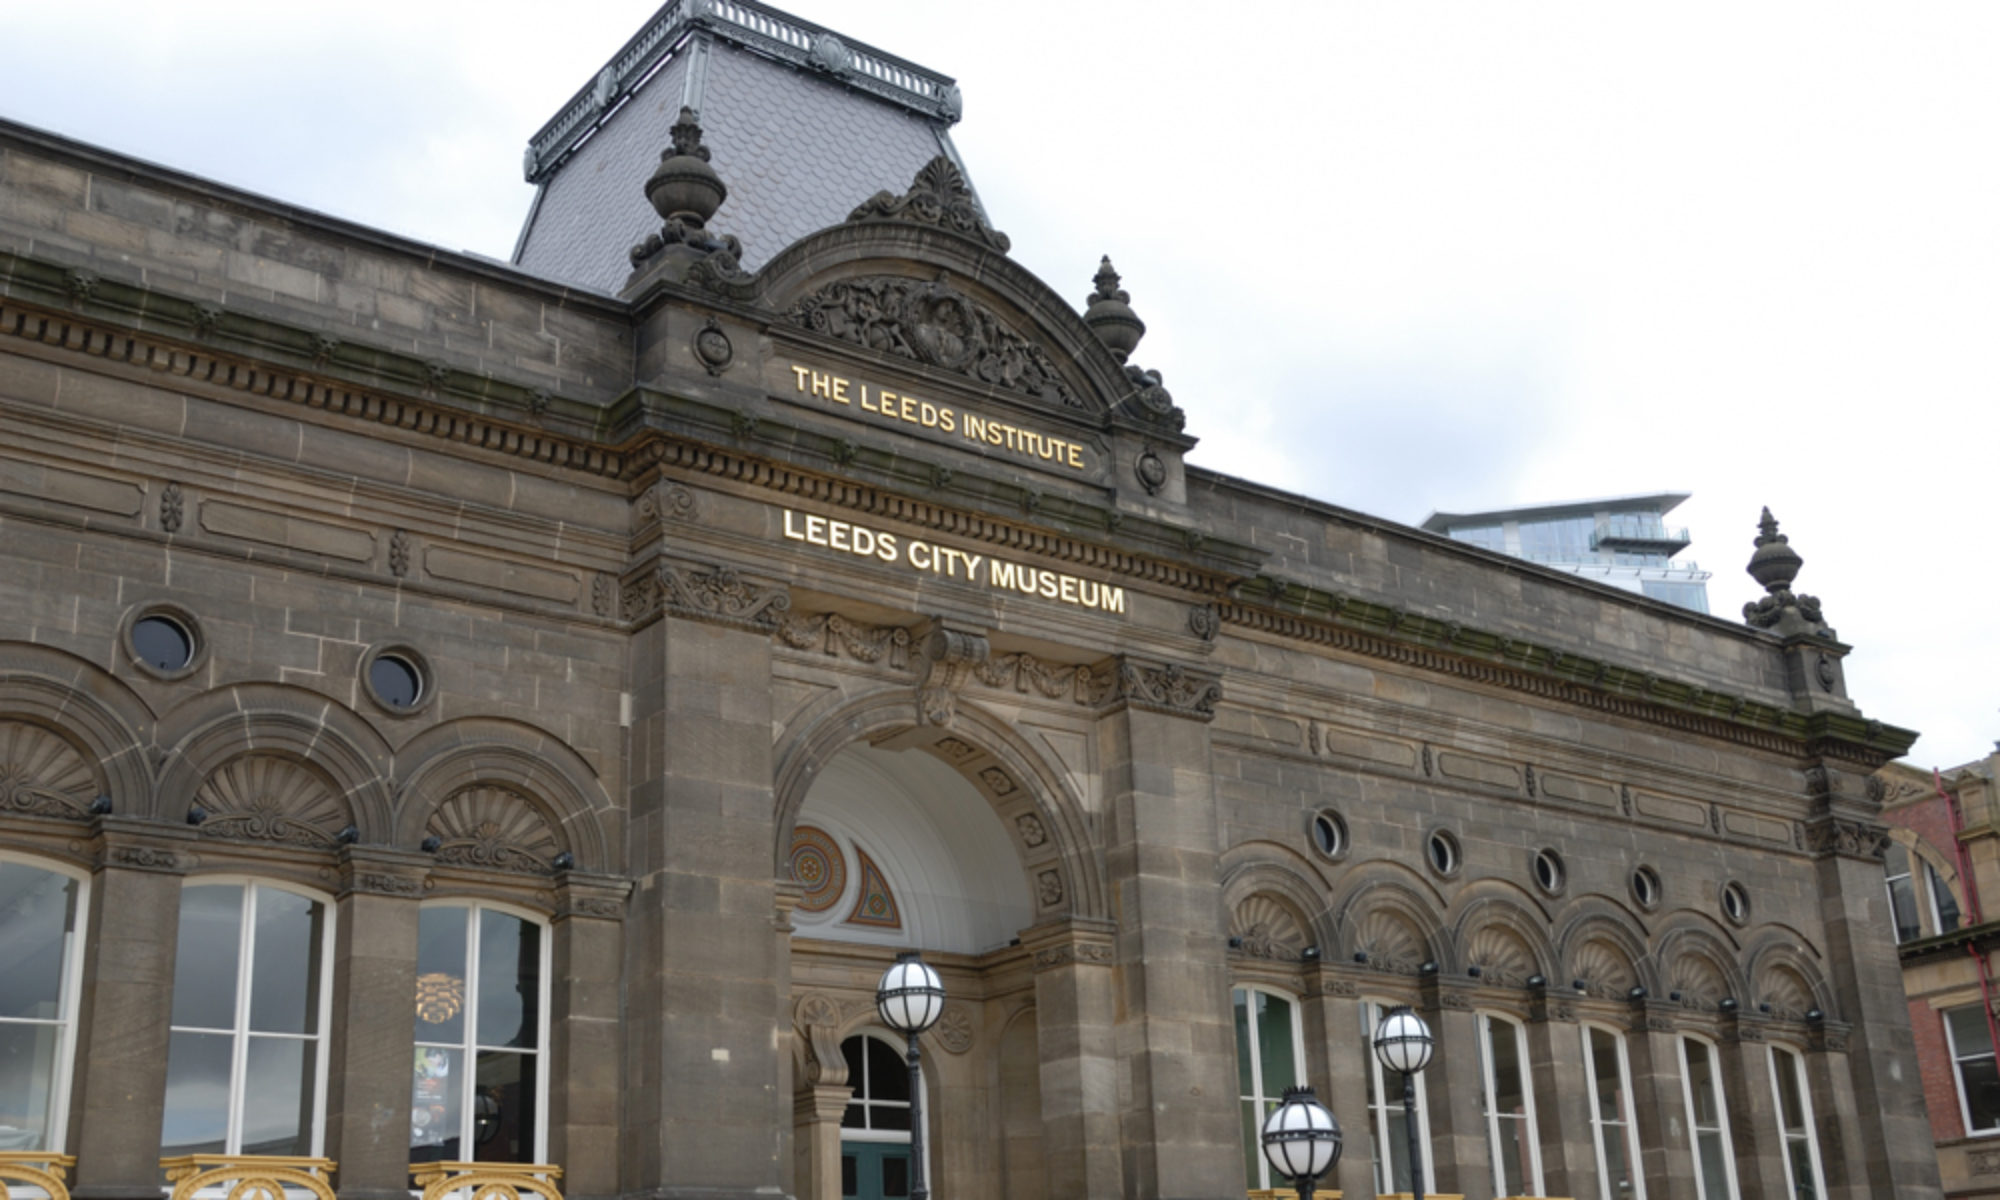 Friends of Leeds City Museums